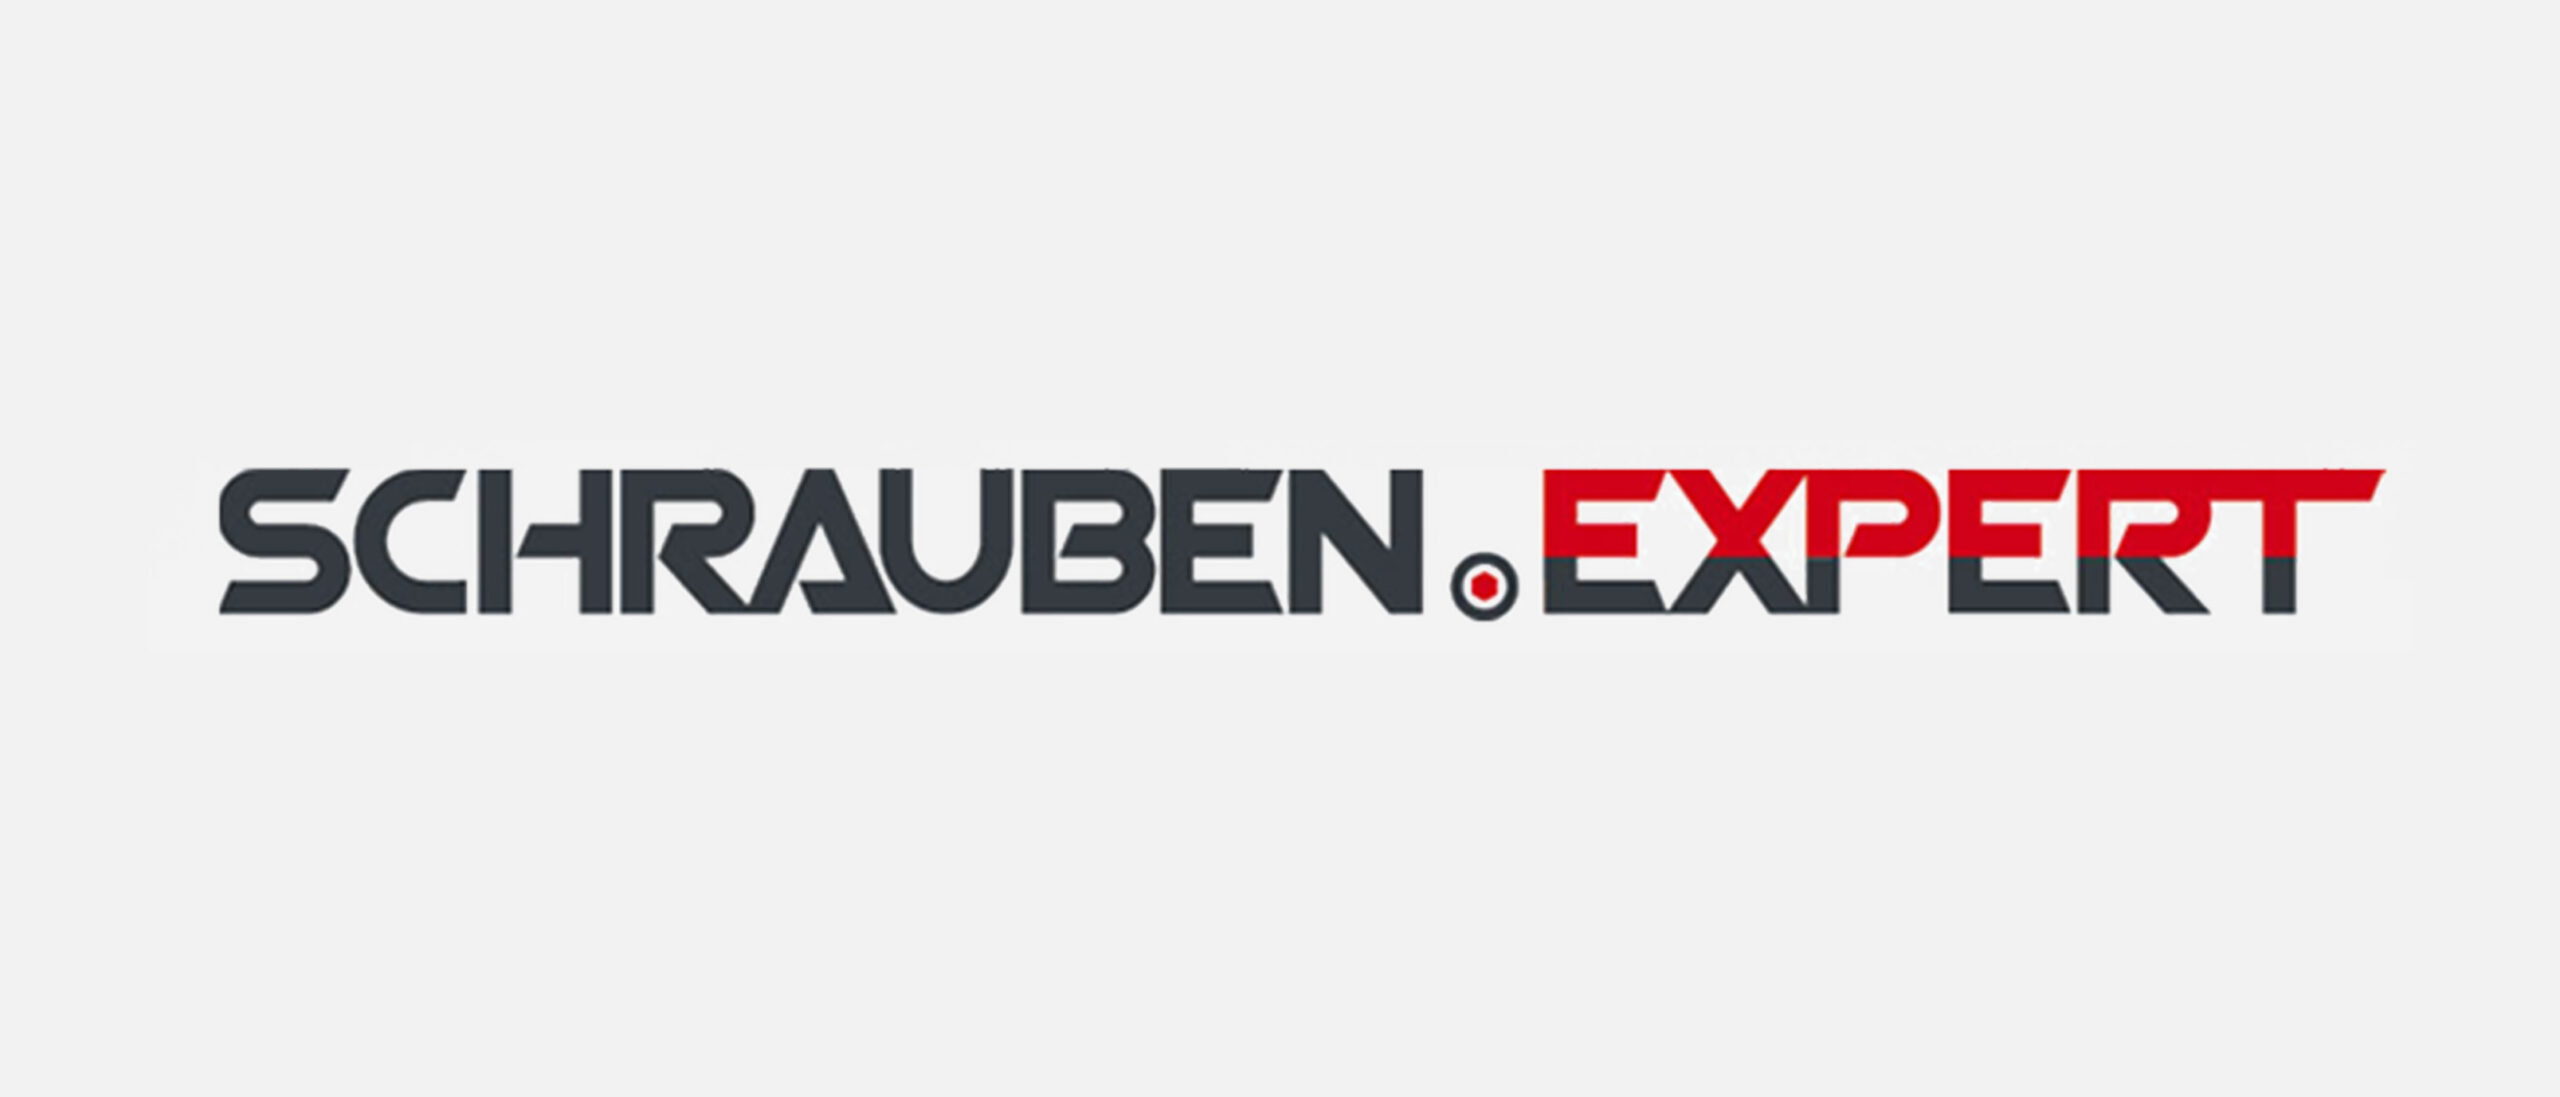 Schrauben Expert Logo